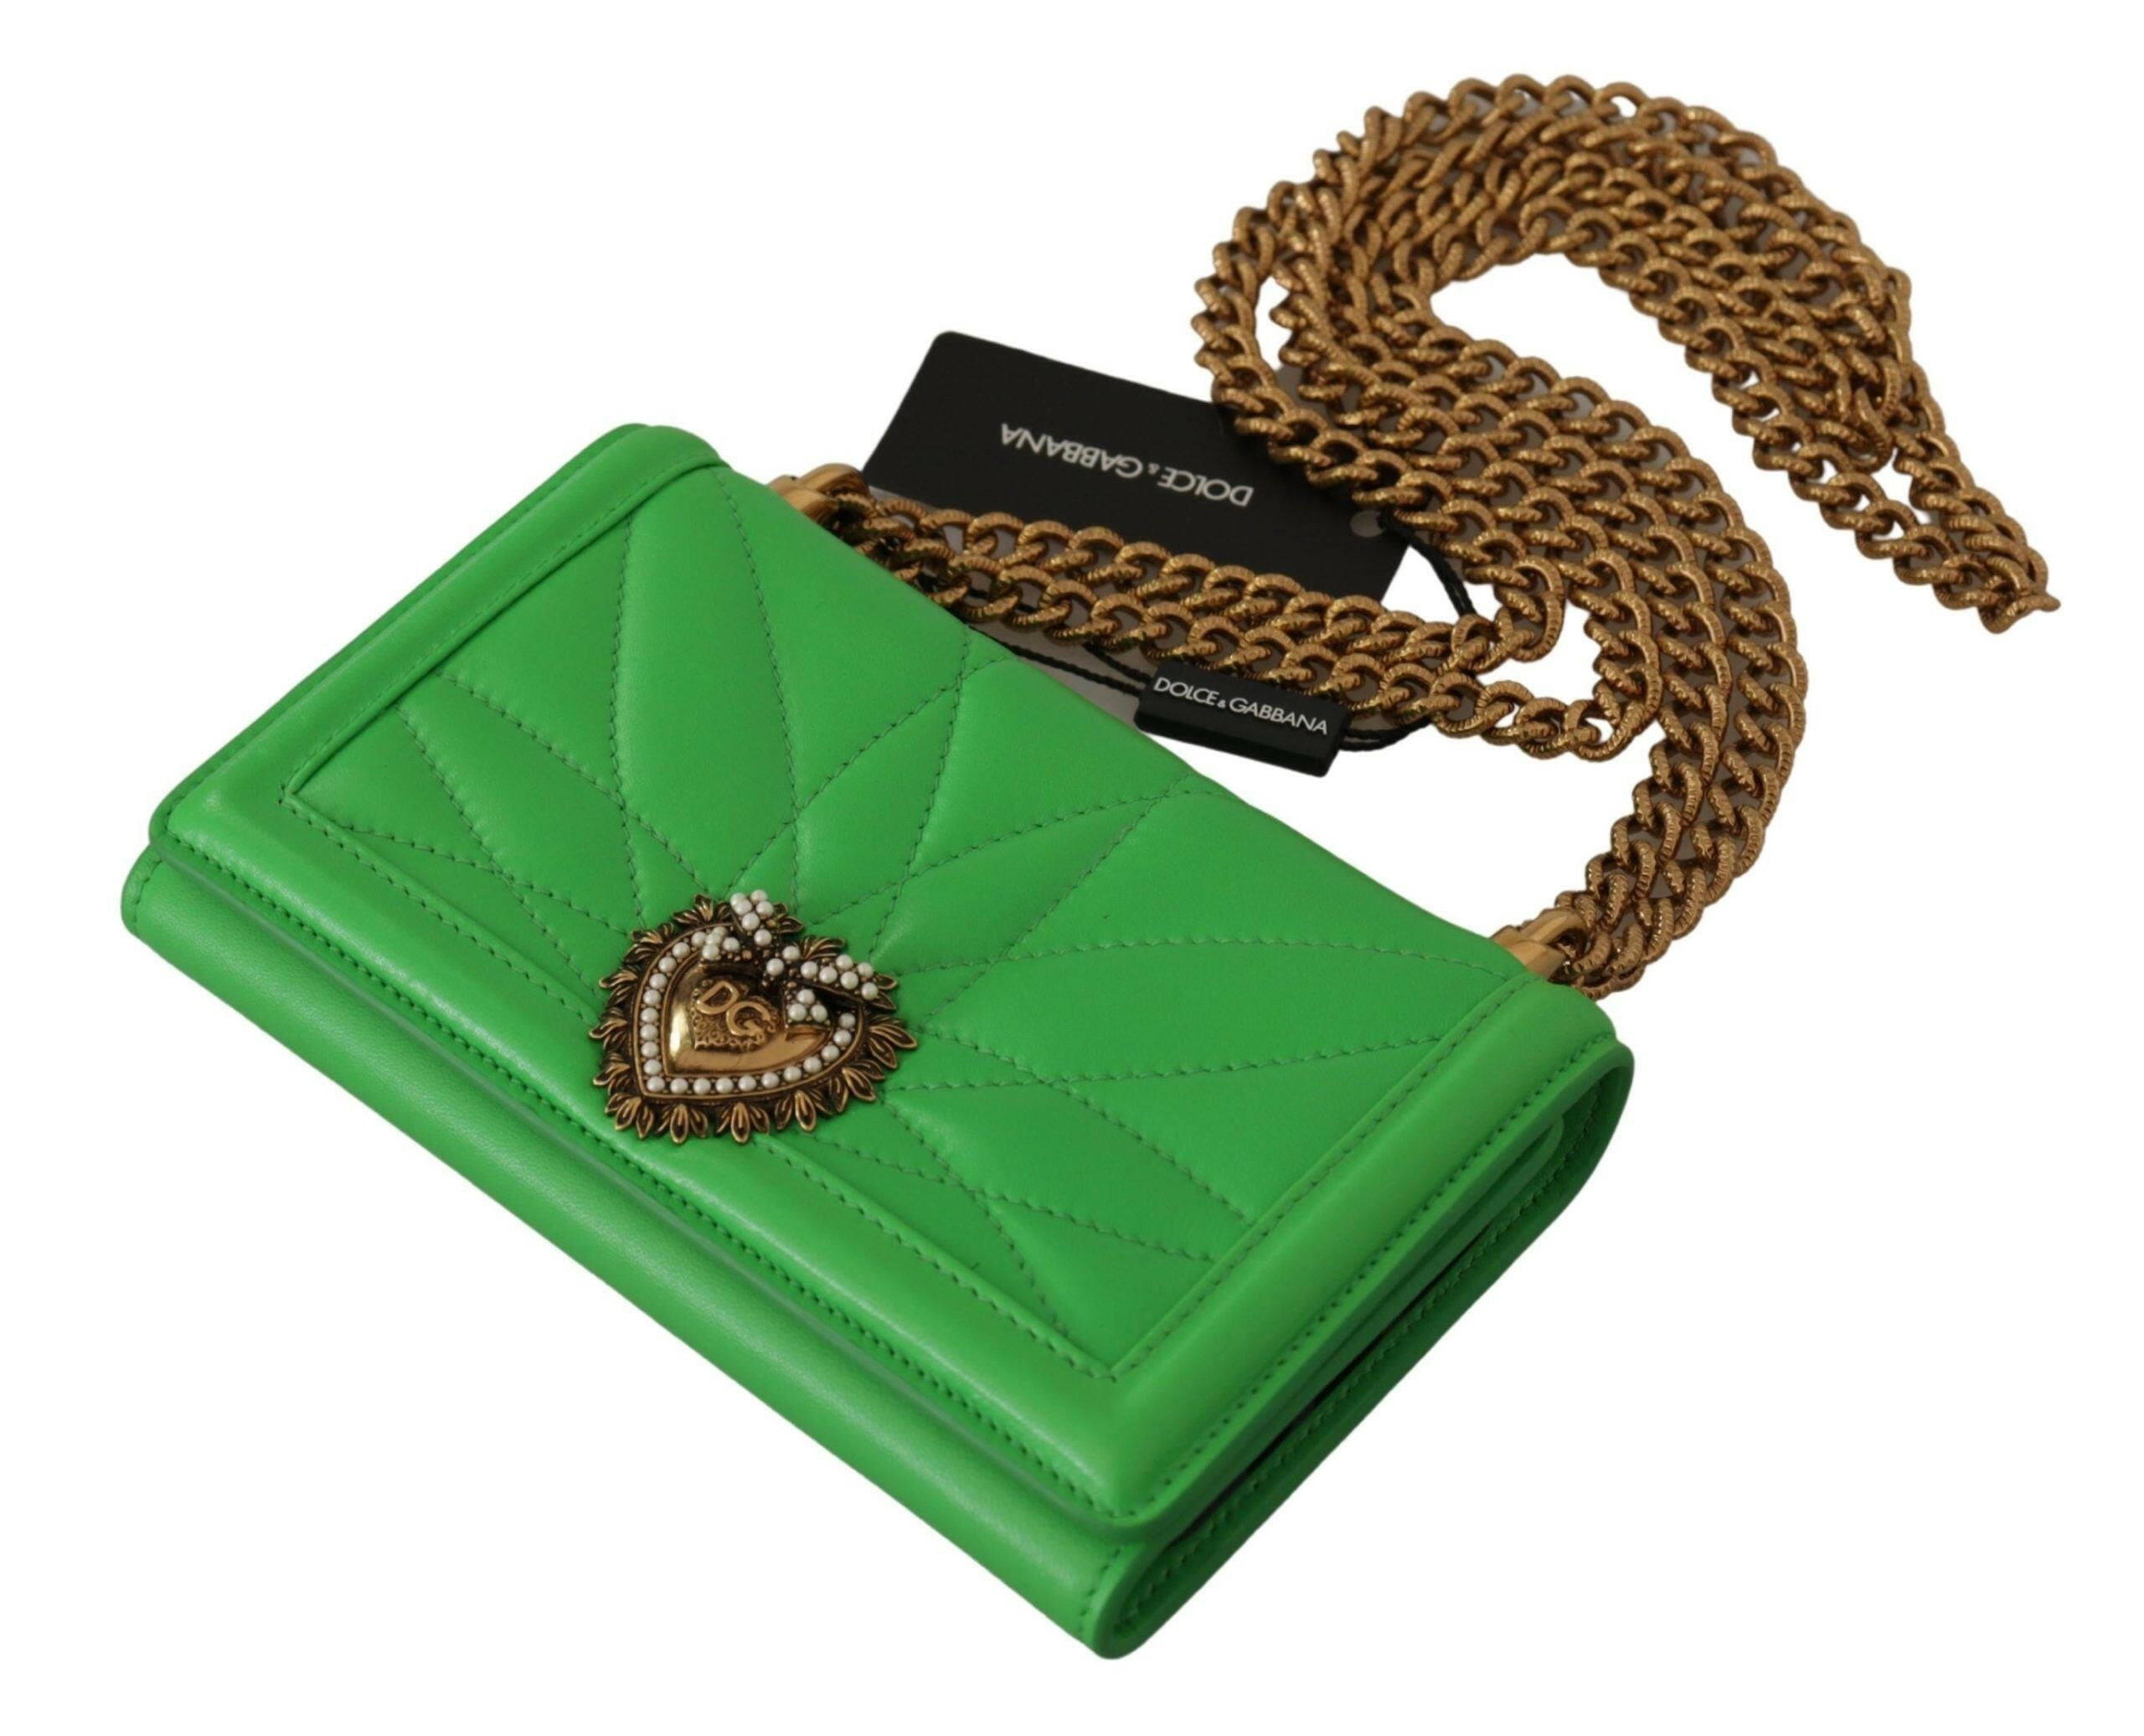 Dolce & Gabbana Green Leather Devotion Cardholder IPHONE 11 PRO Wallet - GENUINE AUTHENTIC BRAND LLC  